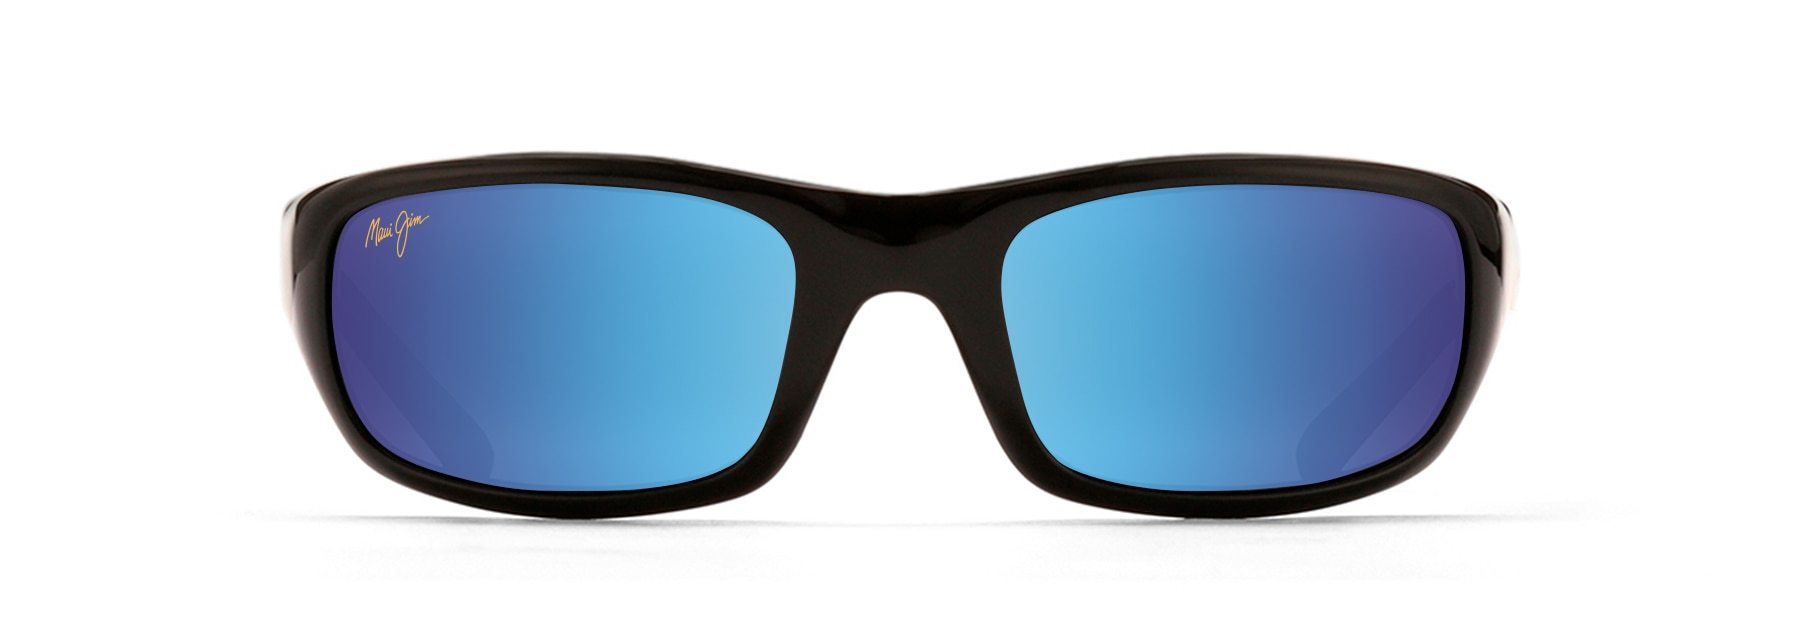 MyMaui Stingray MM103-014 Sunglasses